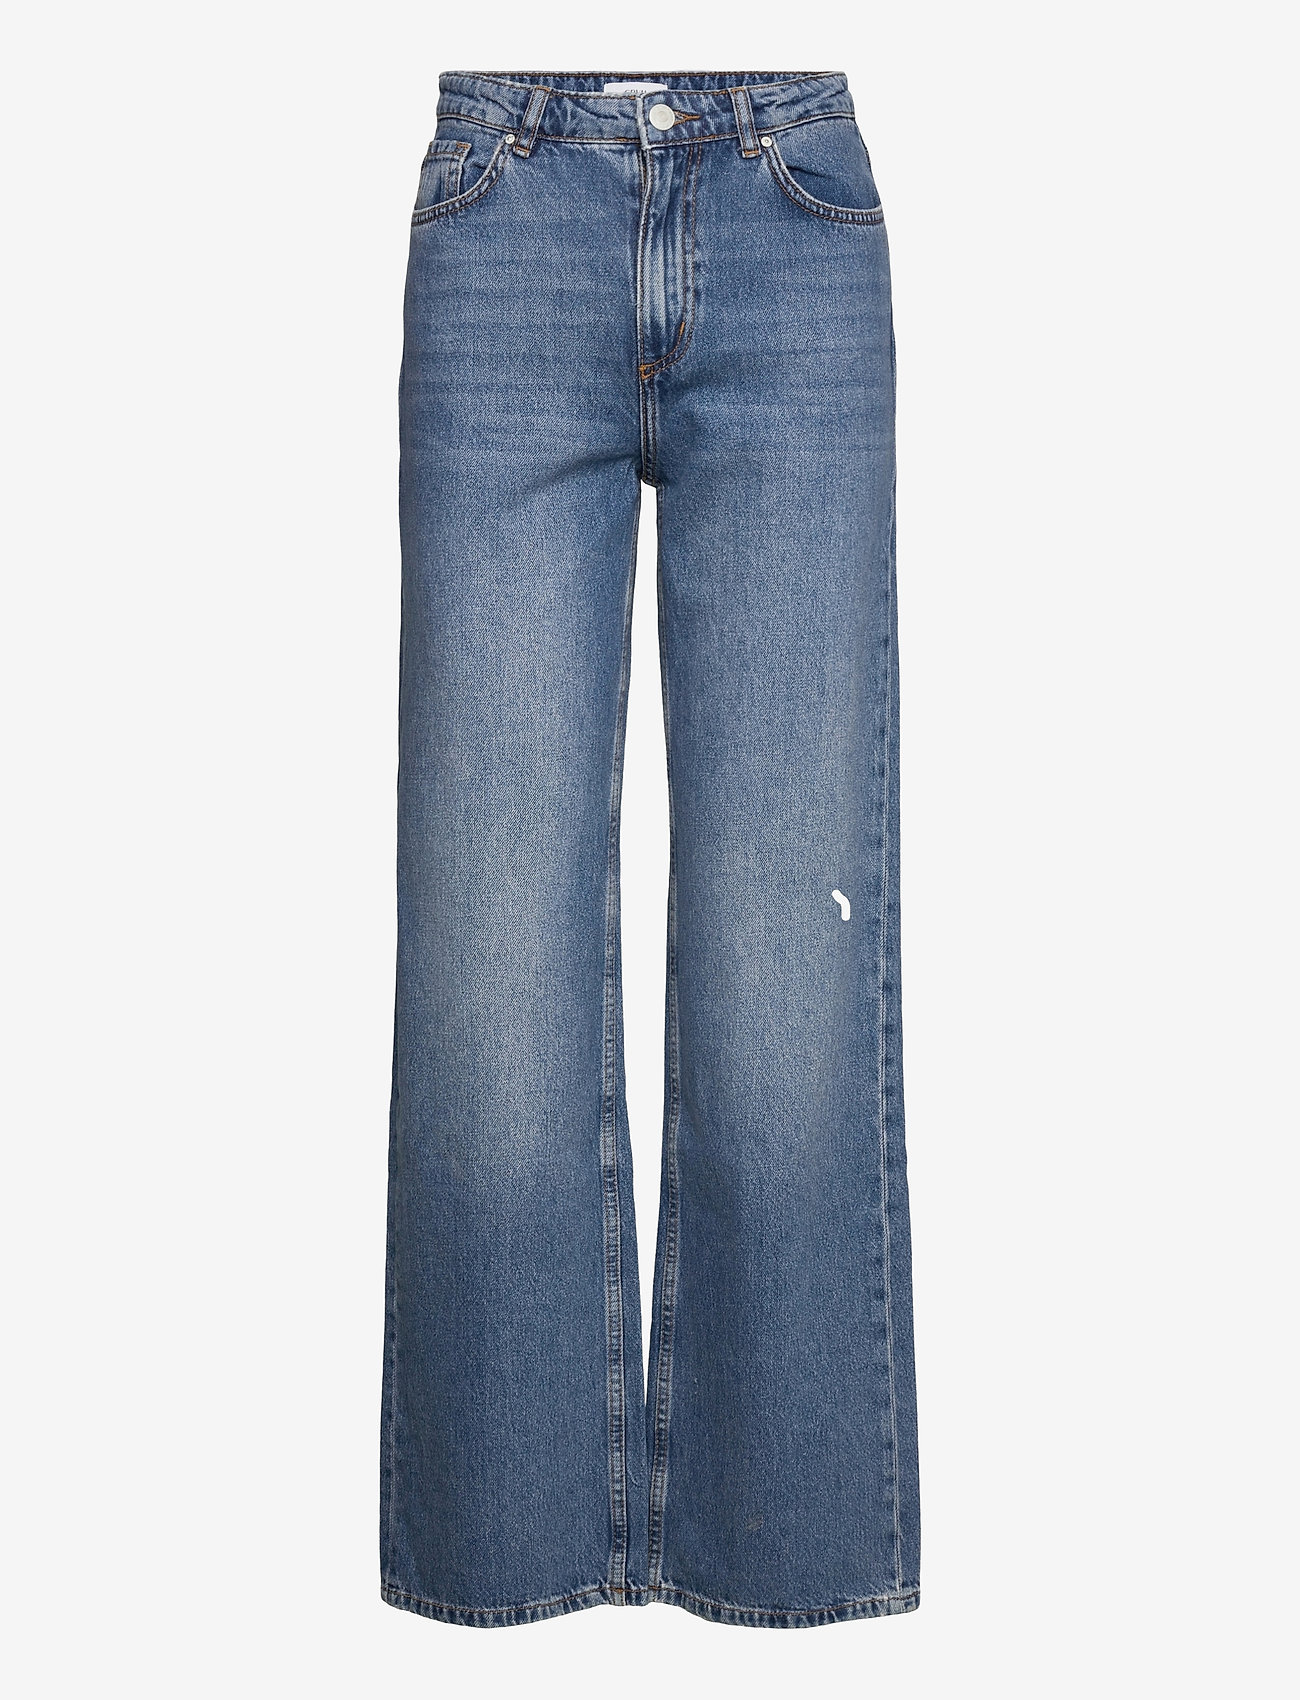 Bestemt Martin Luther King Junior rygrad Envii Enbree Jeans 6801 - Brede jeans | Boozt.com